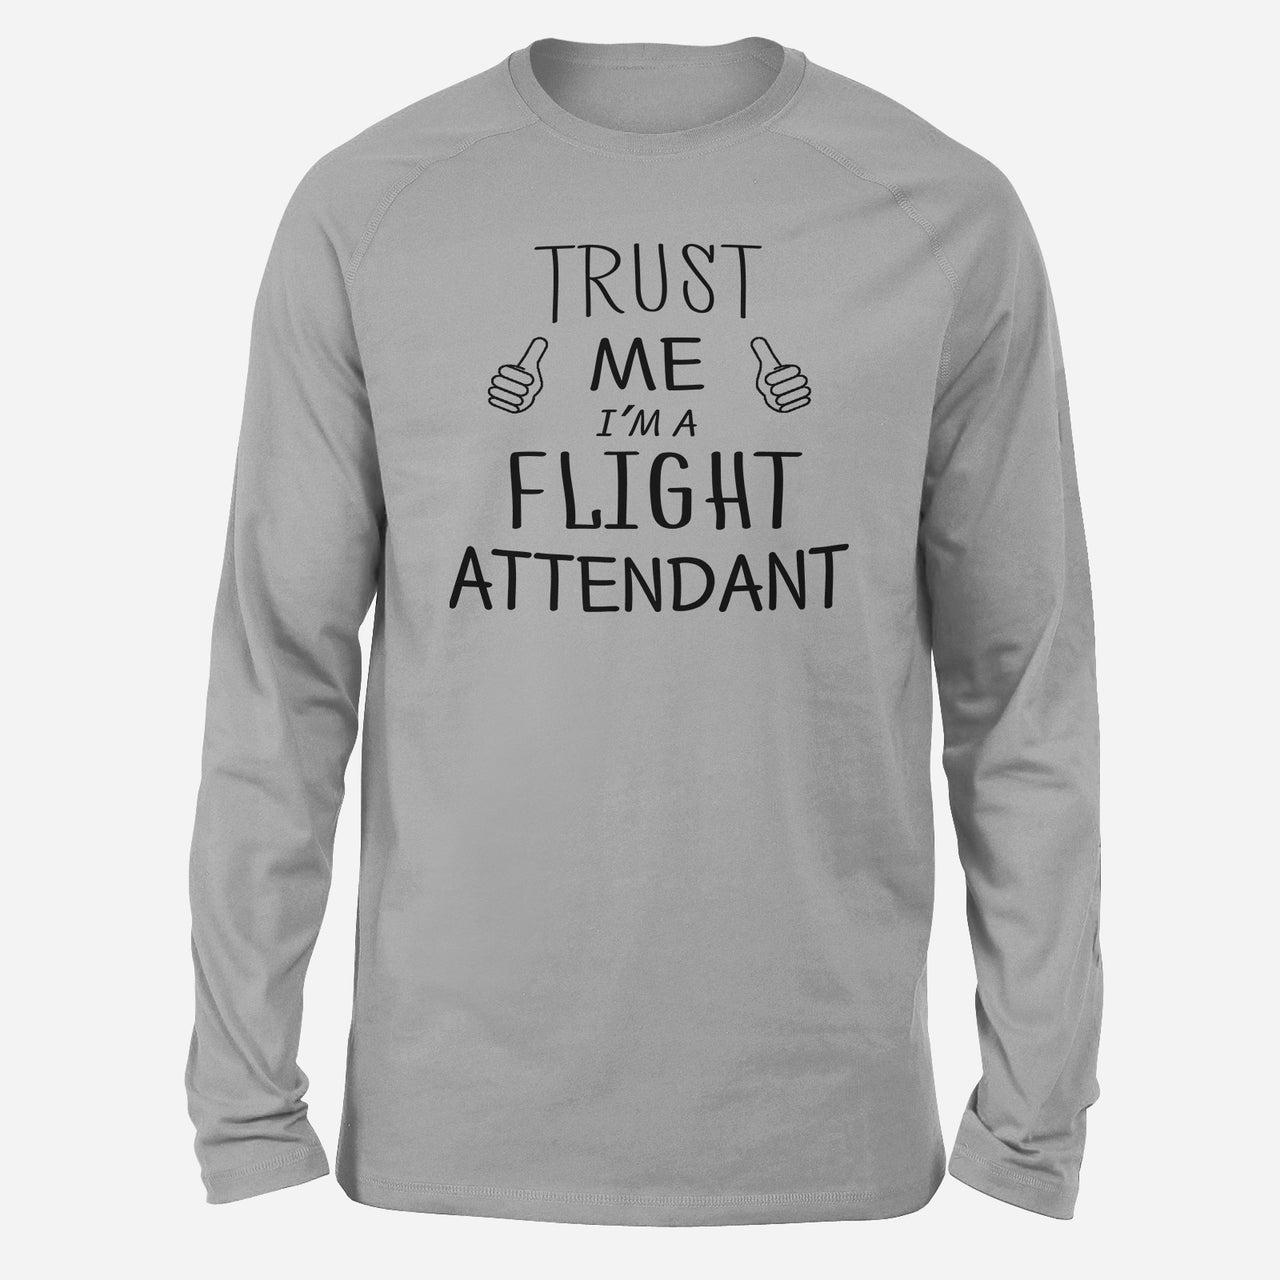 Trust Me I'm a Flight Attendant Designed Long-Sleeve T-Shirts